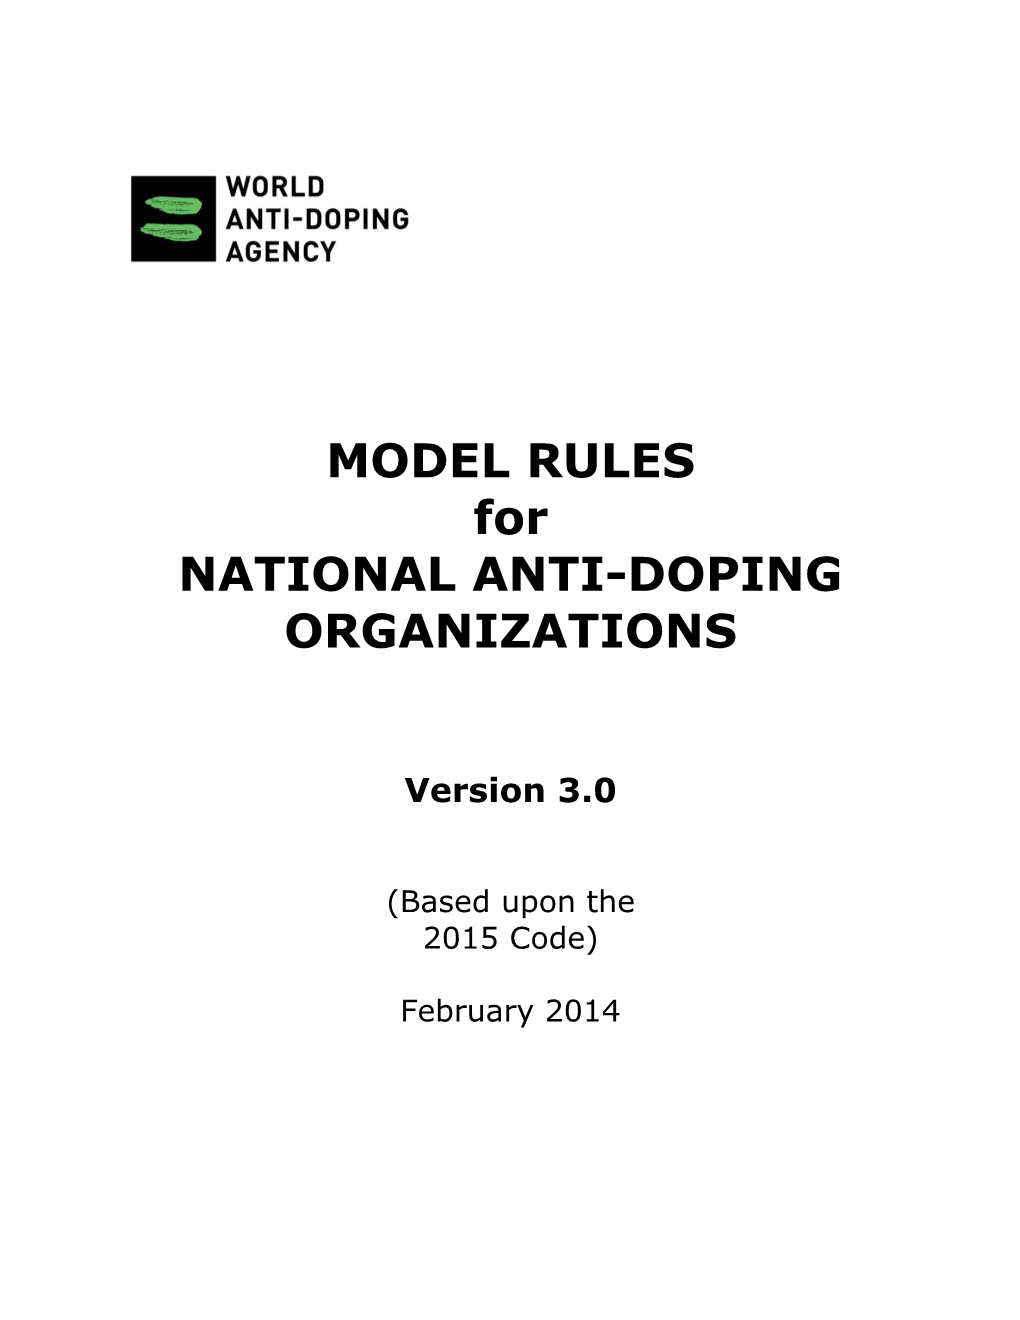 National Anti-Doping Organizations